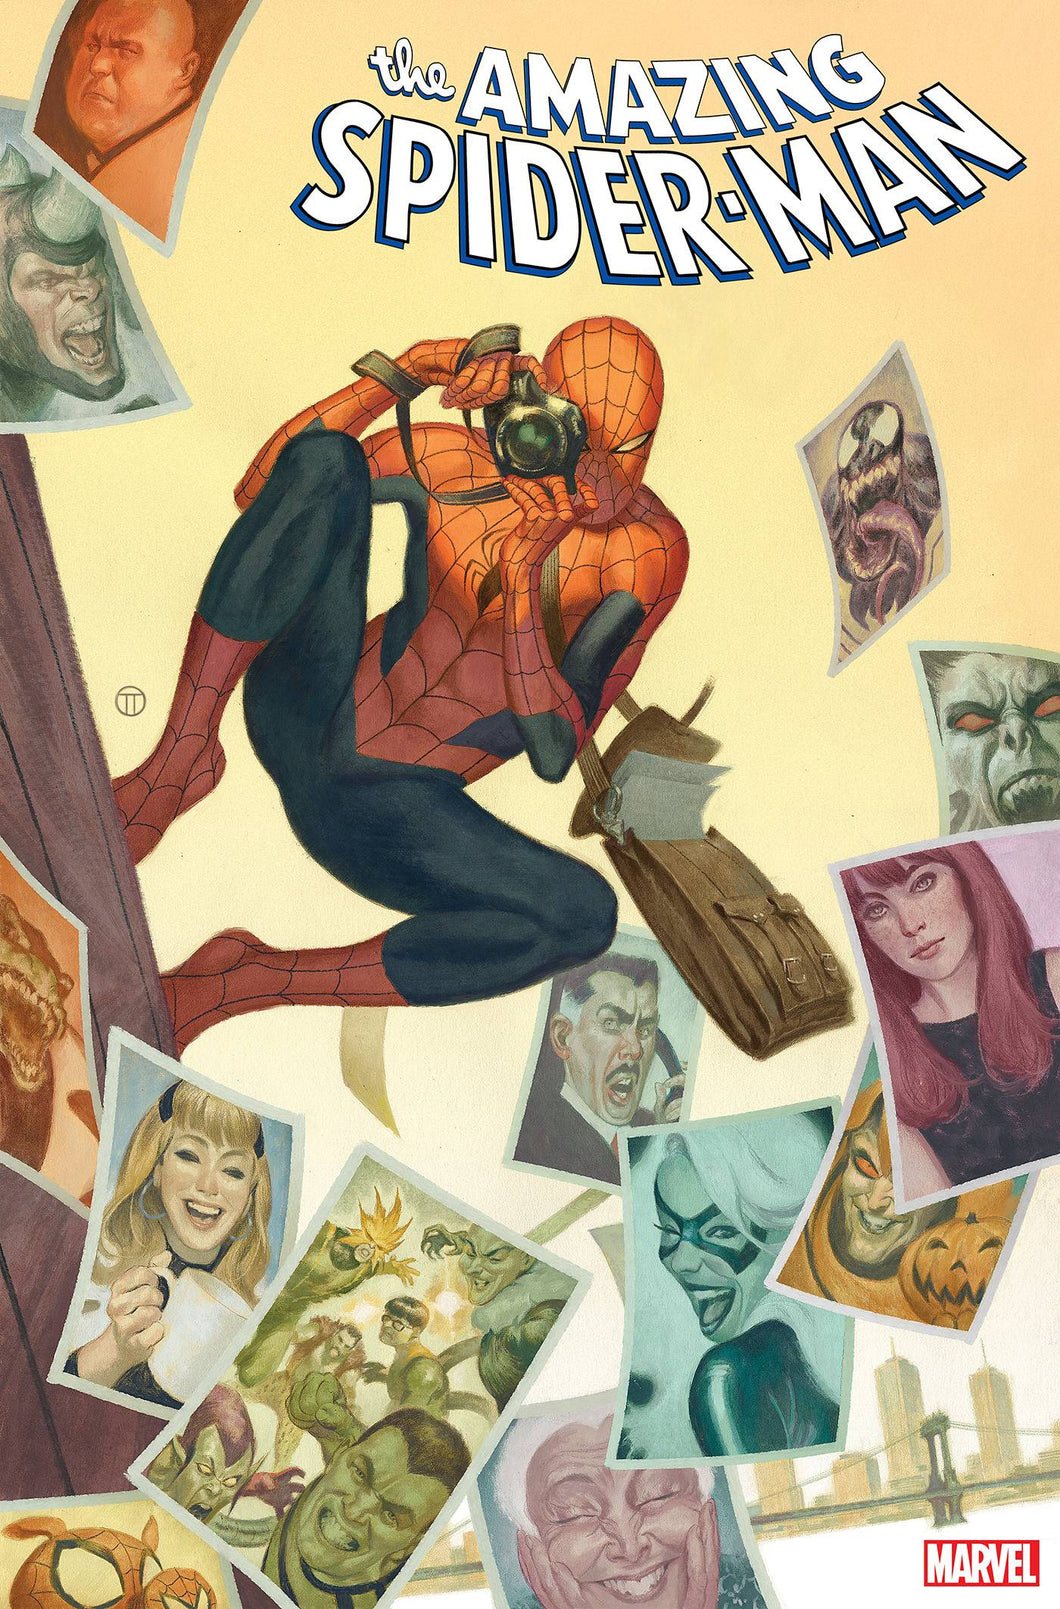 Amazing Spider-Man #6 (Incentive 1:25 Tedesco Variant)